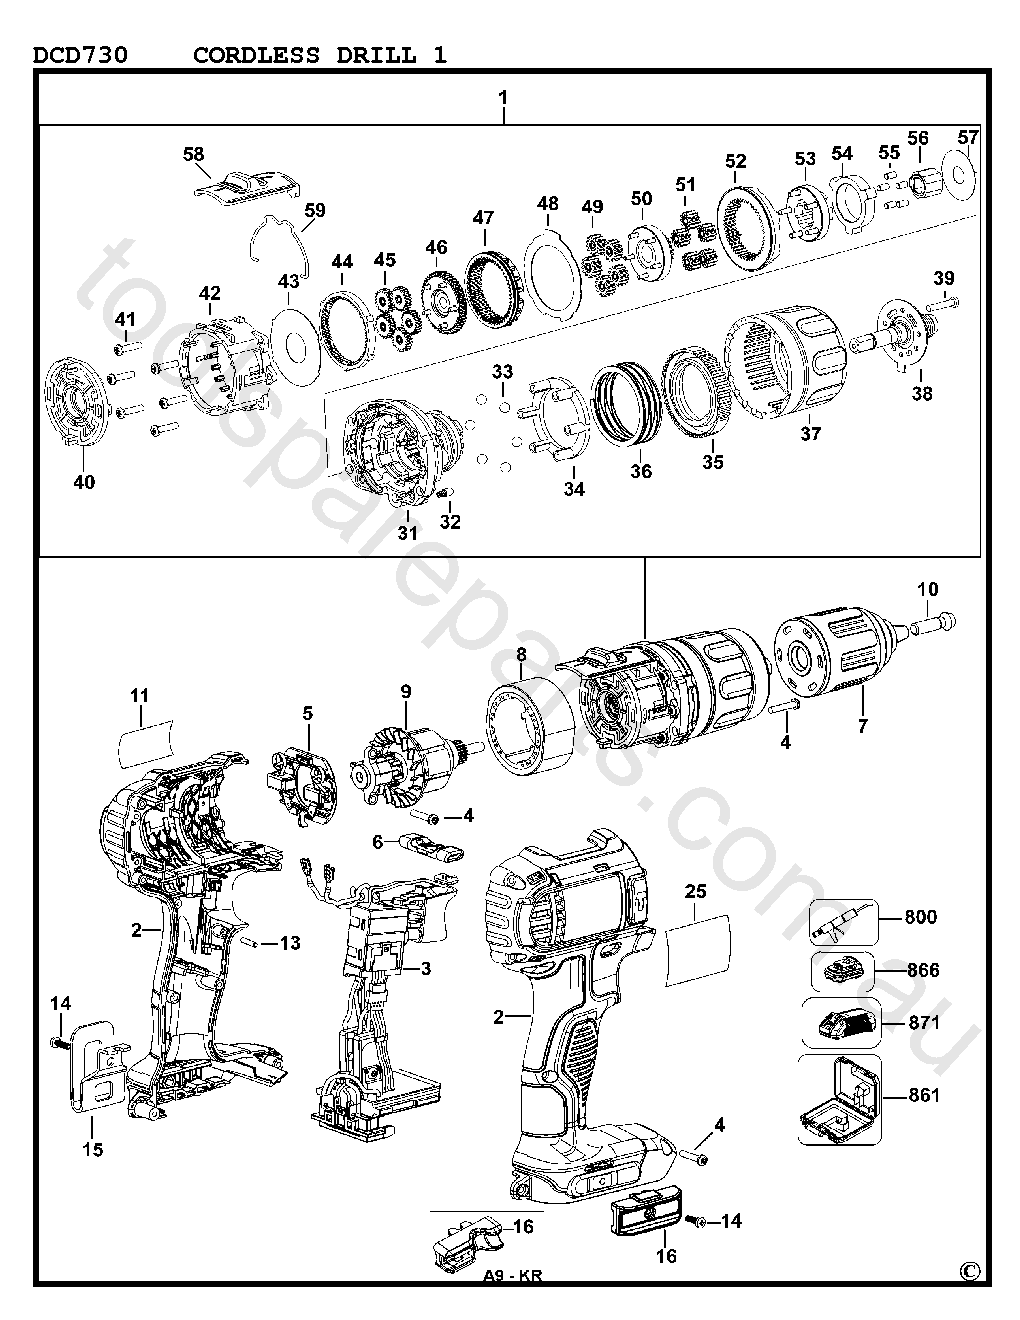 DCD730 - Spare Parts